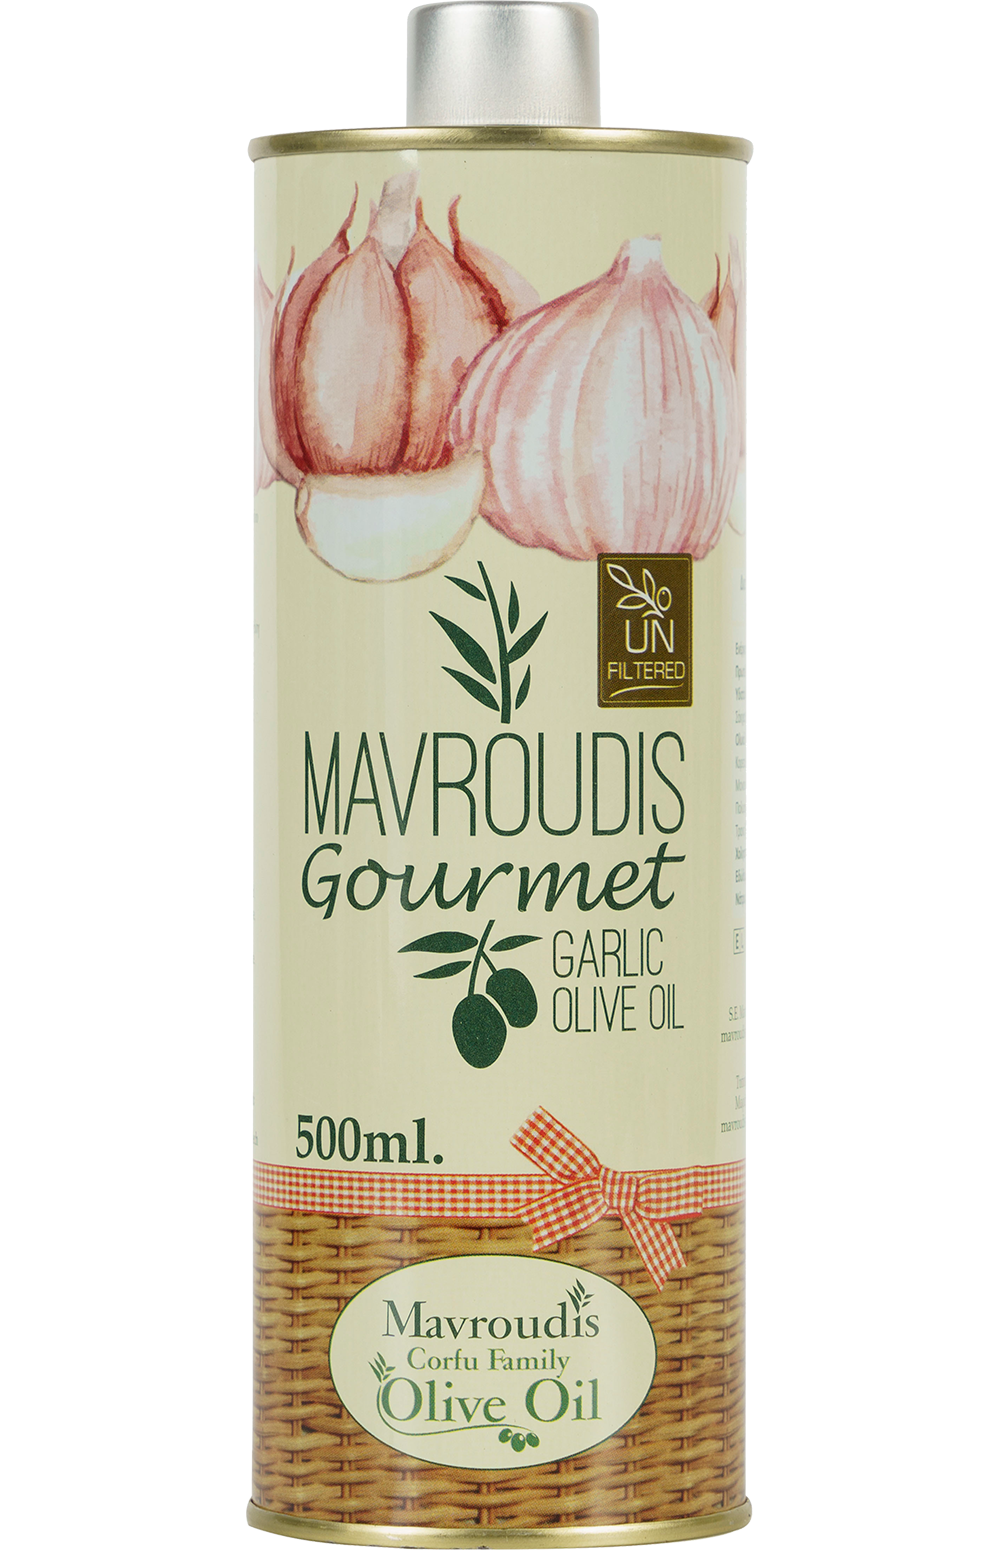 Mavroudis Gourmet Garlic